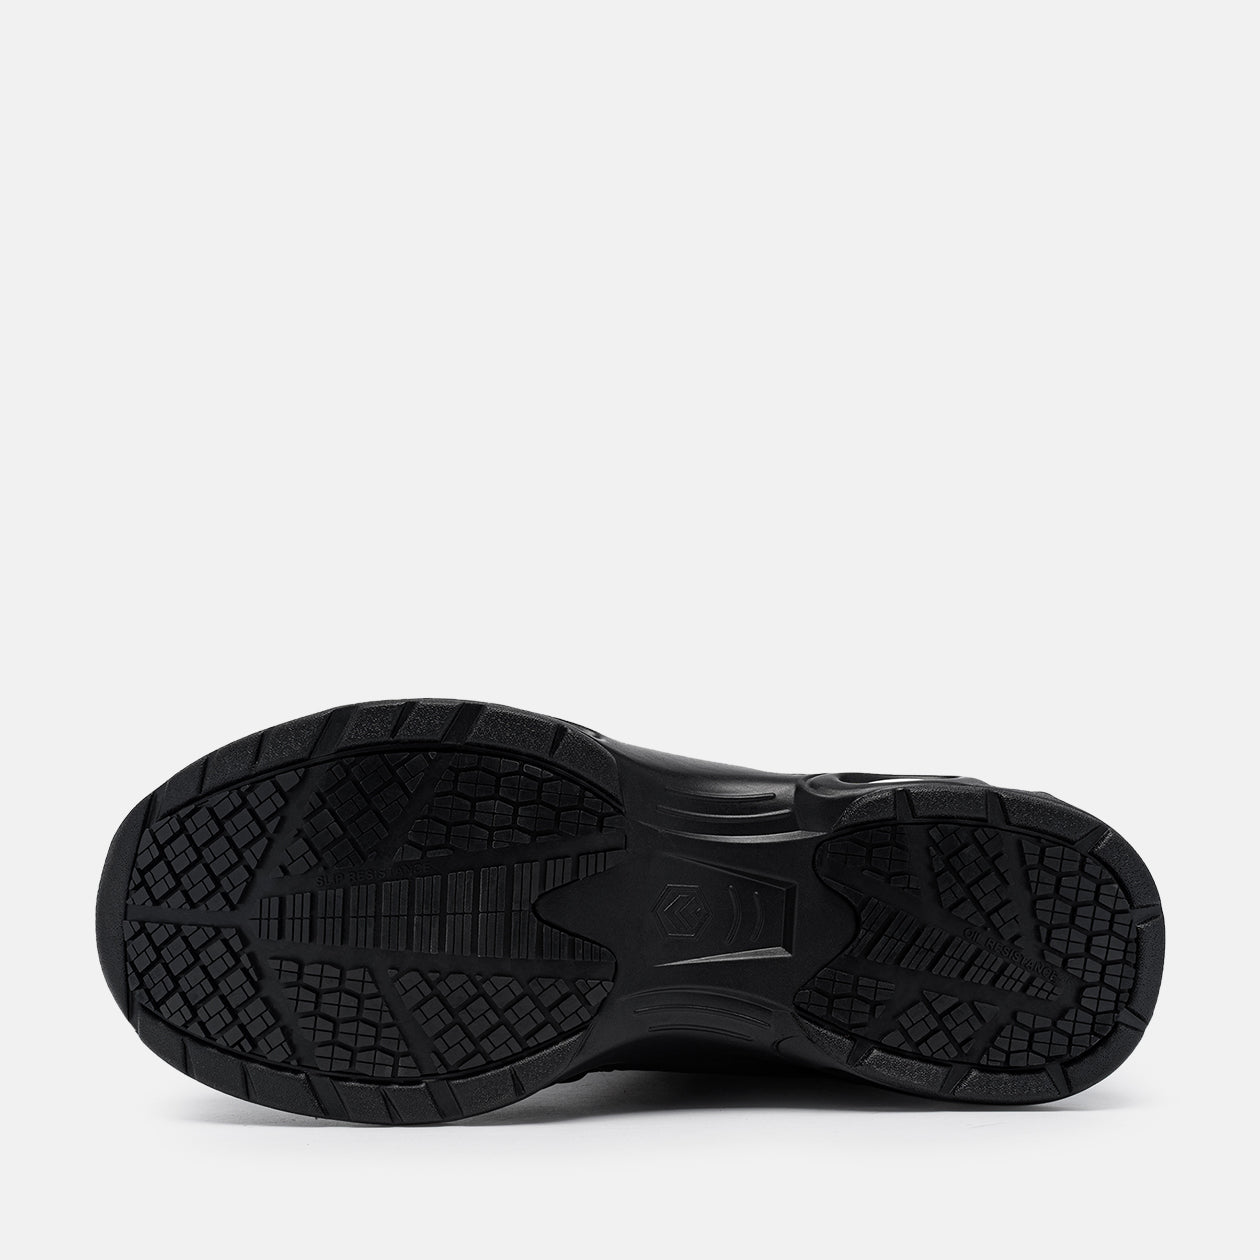 Larnmern Men’s Air Cushion Non Slip Comfortable Work Shoes, Black #21077